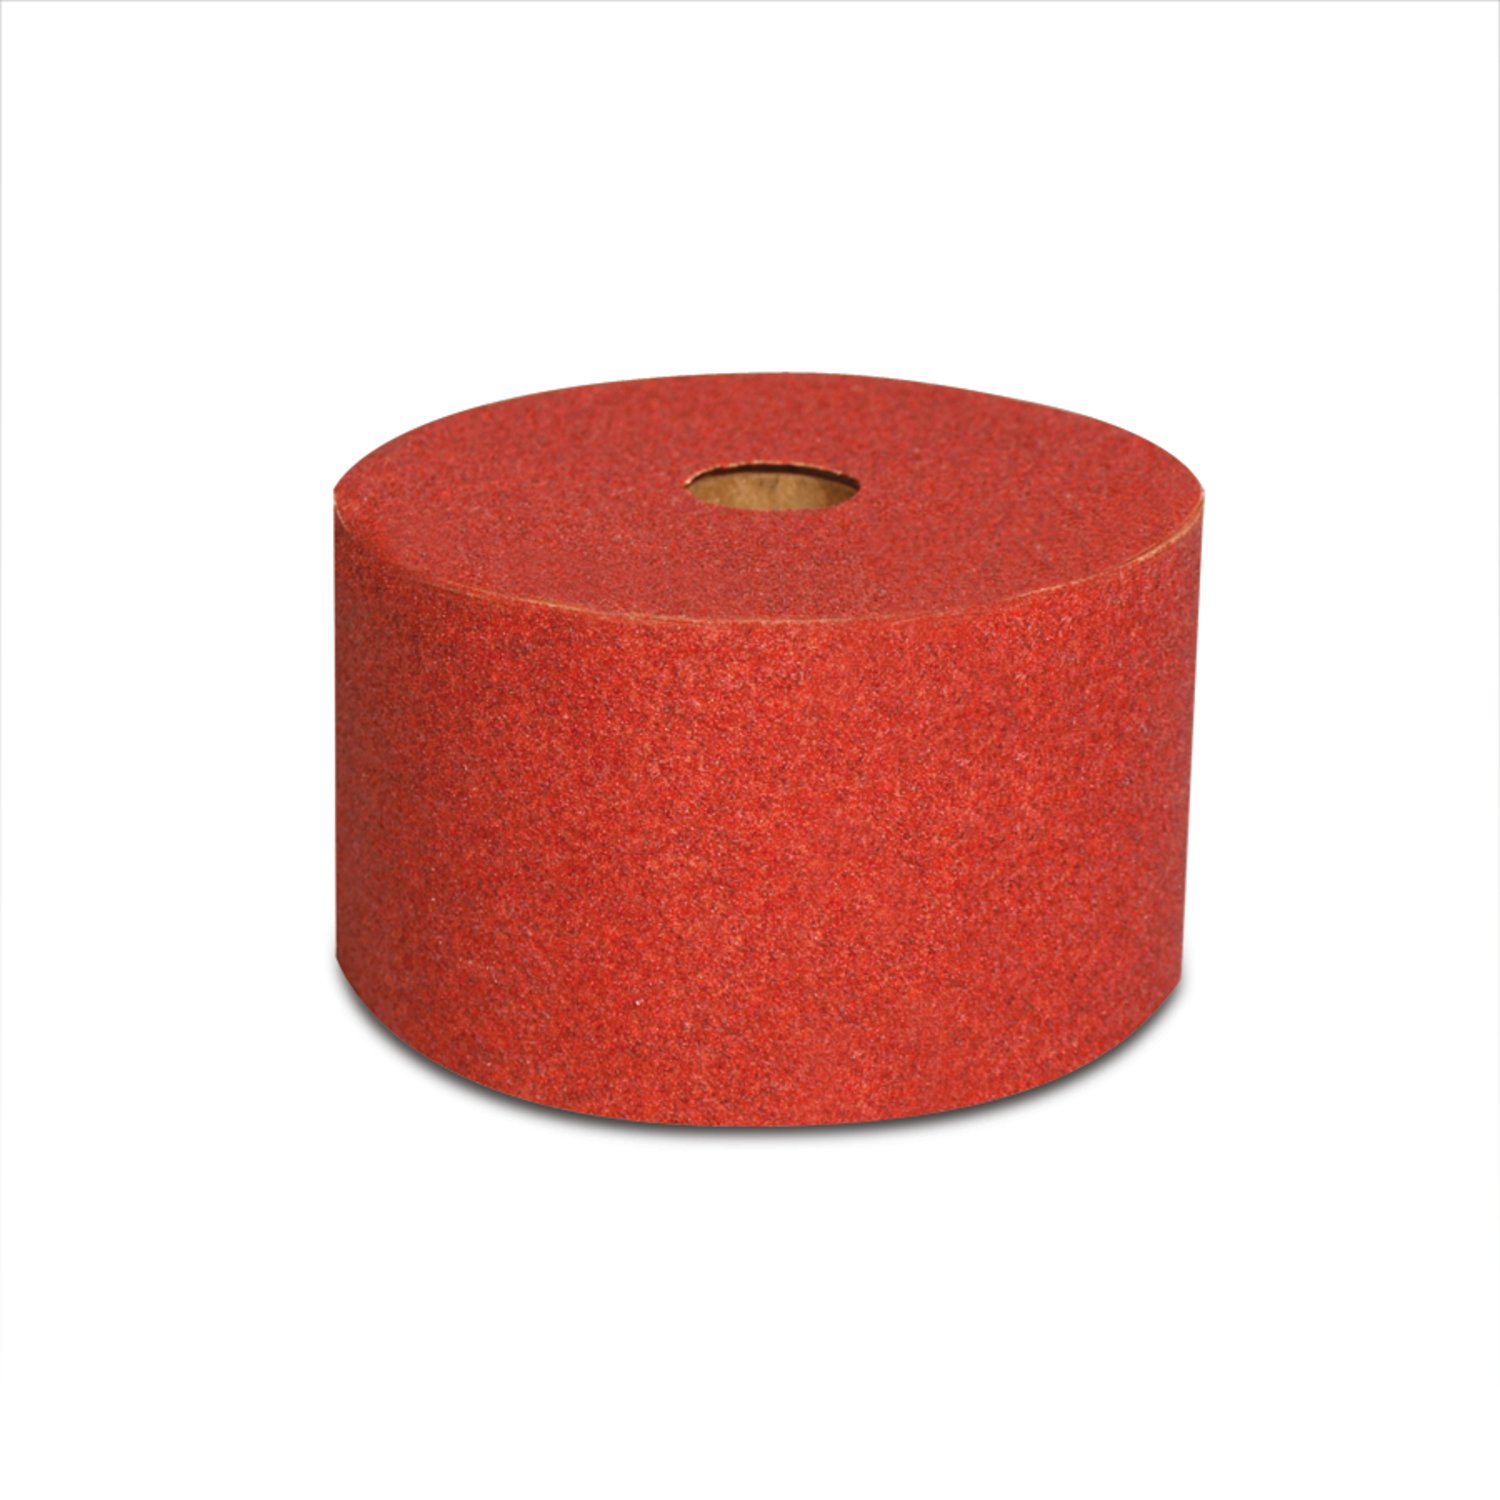 7000119928 - 3M Red Abrasive Stikit Sheet Roll, 01685, P180, 2-3/4 in x 25 yd, 6
rolls per case